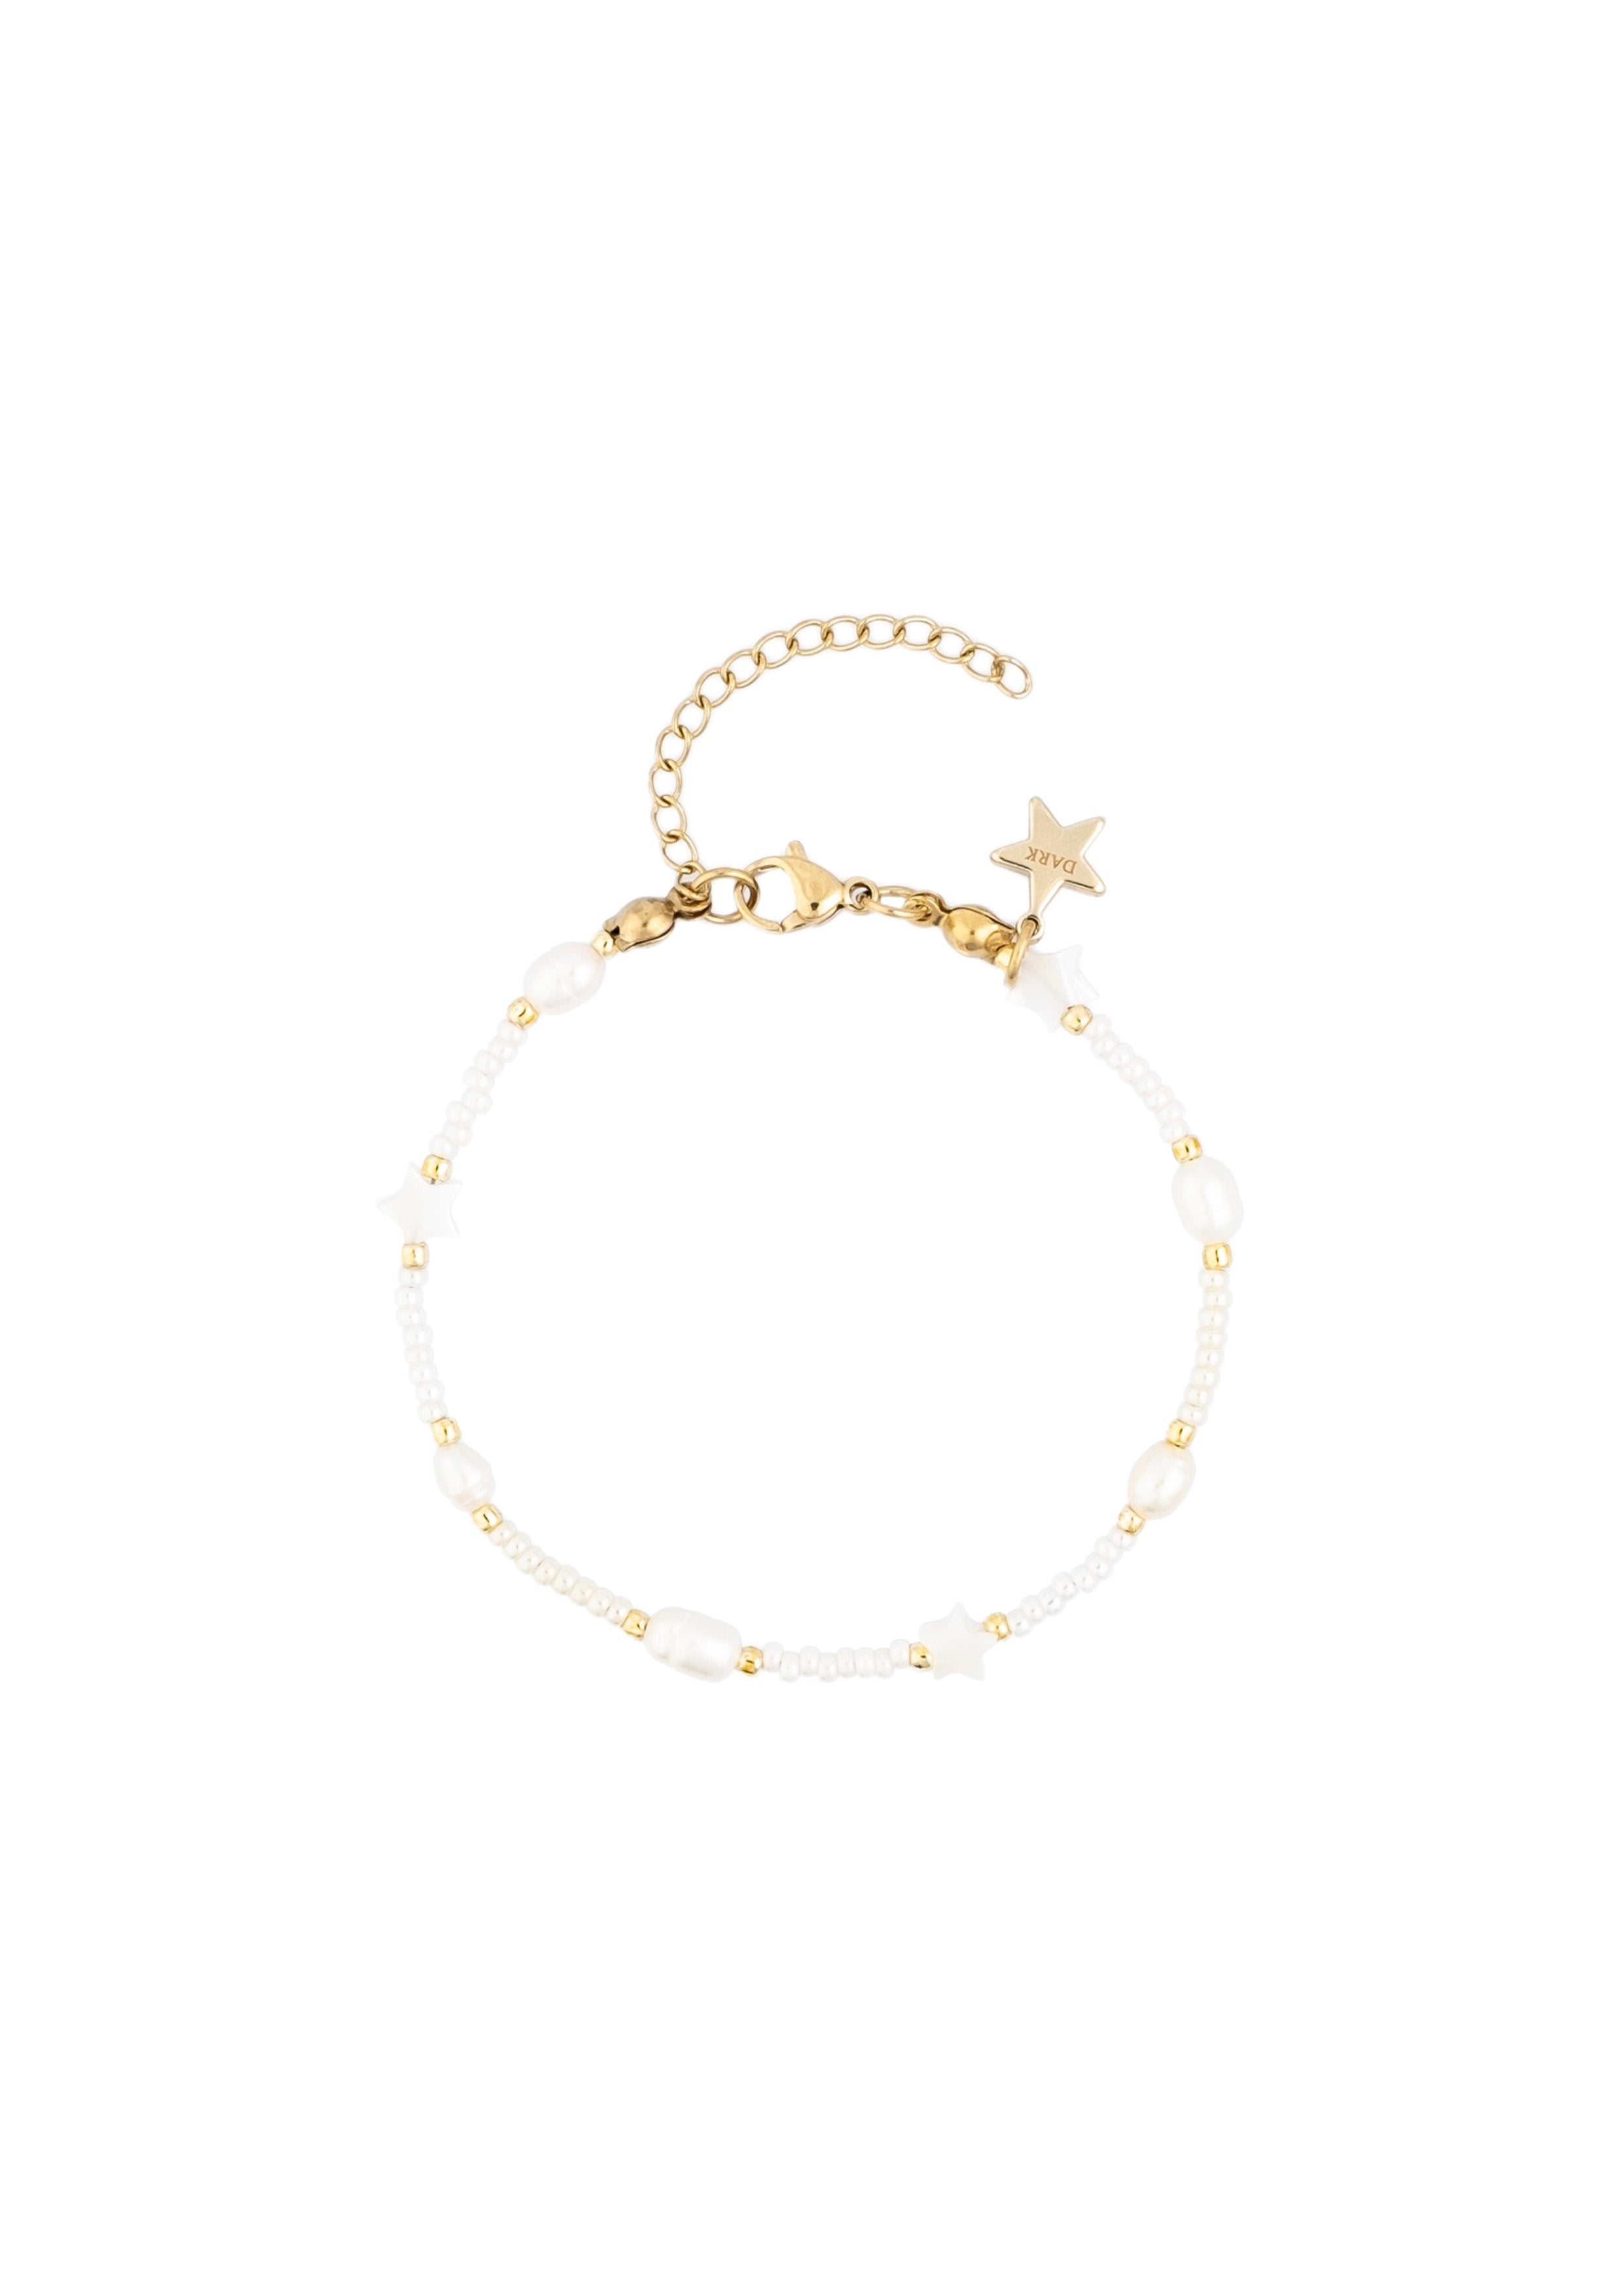 Glass Bead Bracelet w/ Mop Star & Pearls Off White